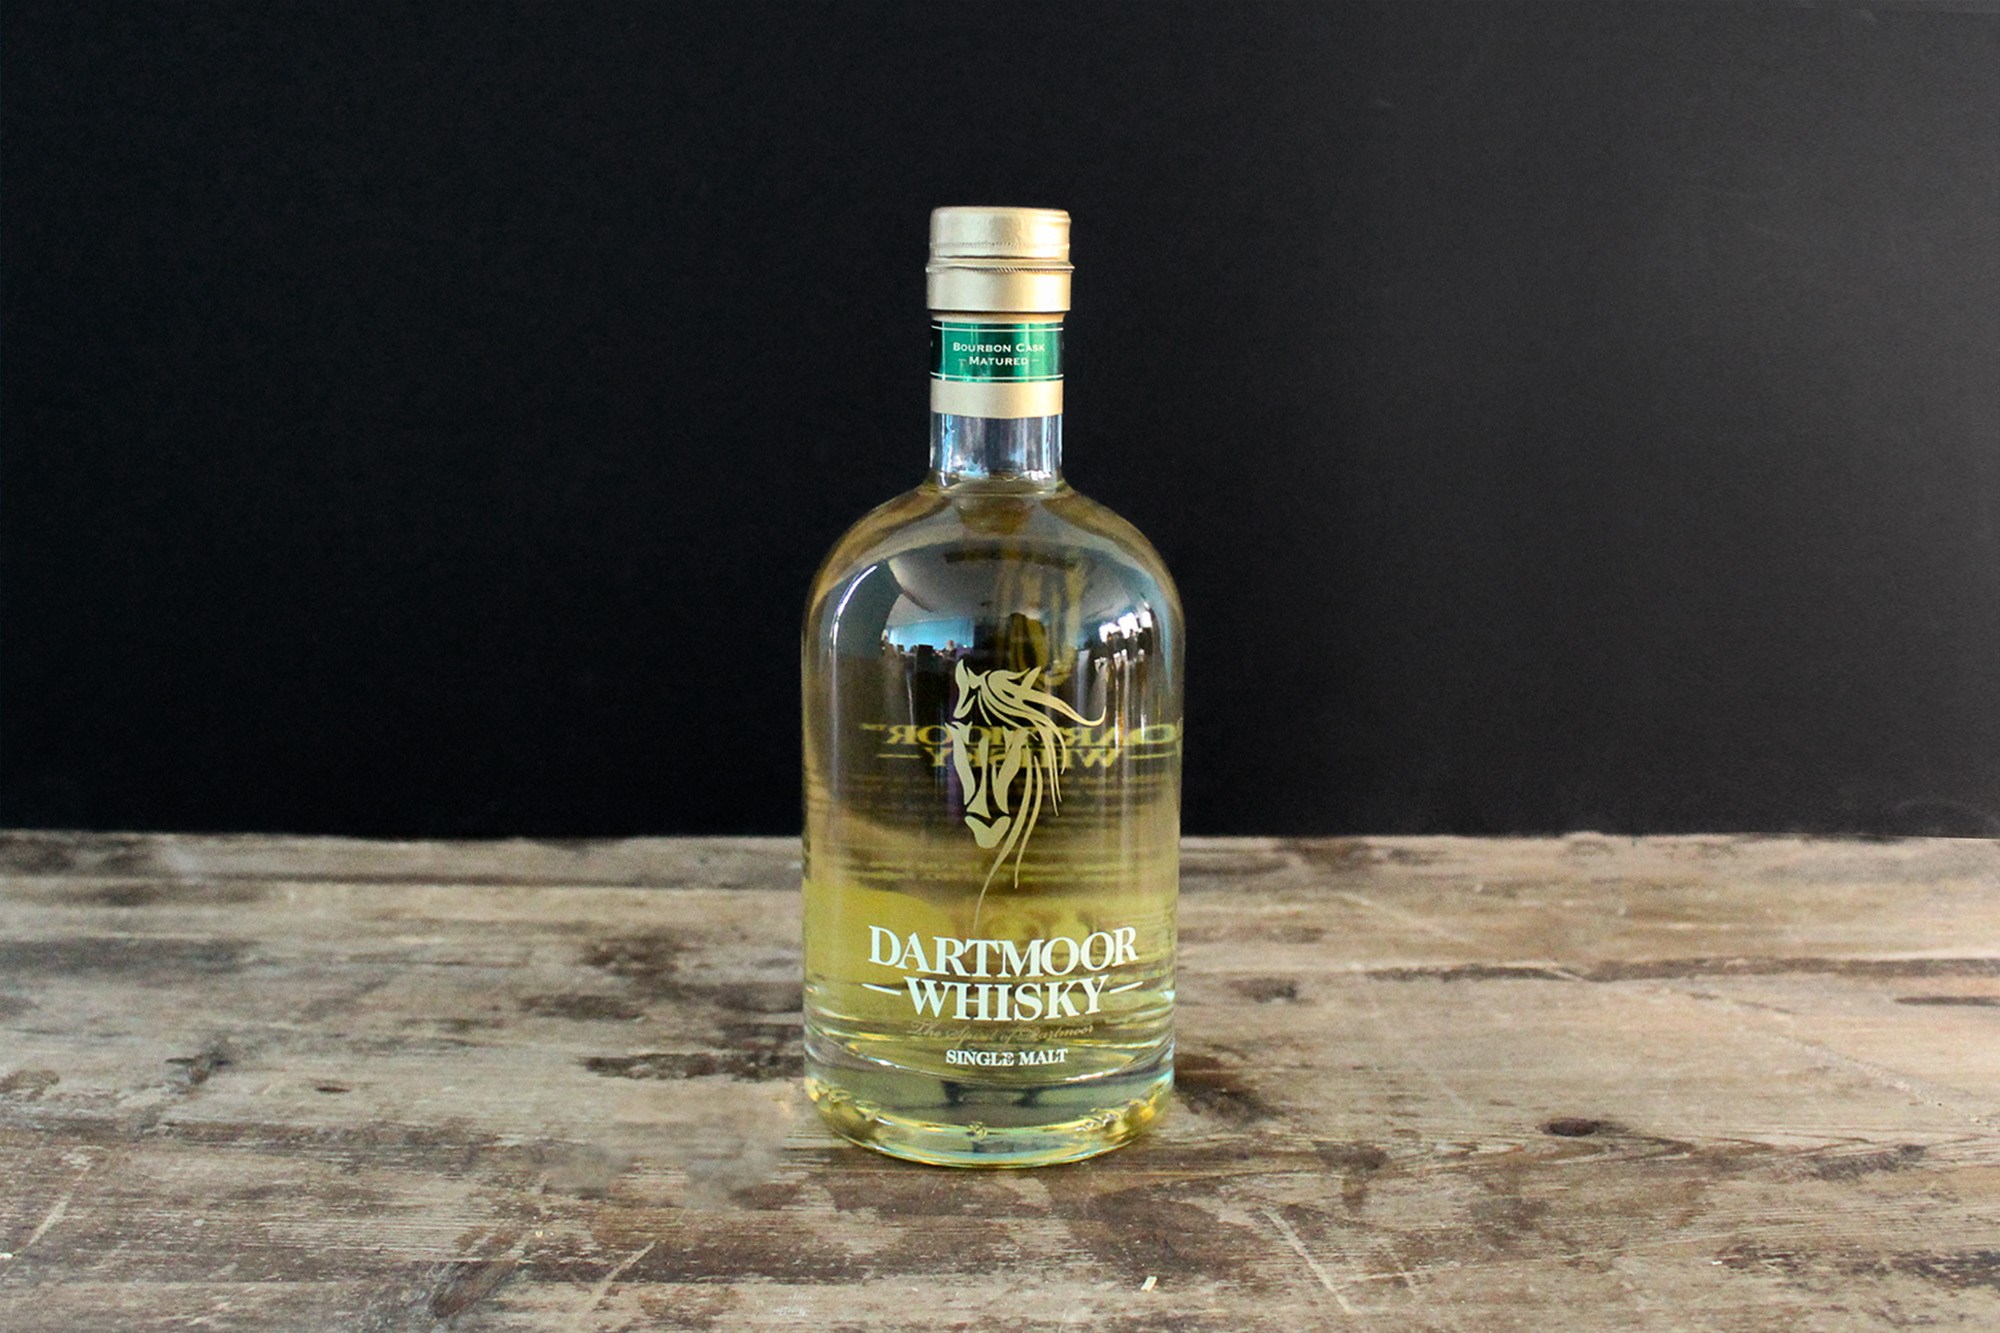 Dartmoor Whisky - Bourbon Cask Matured